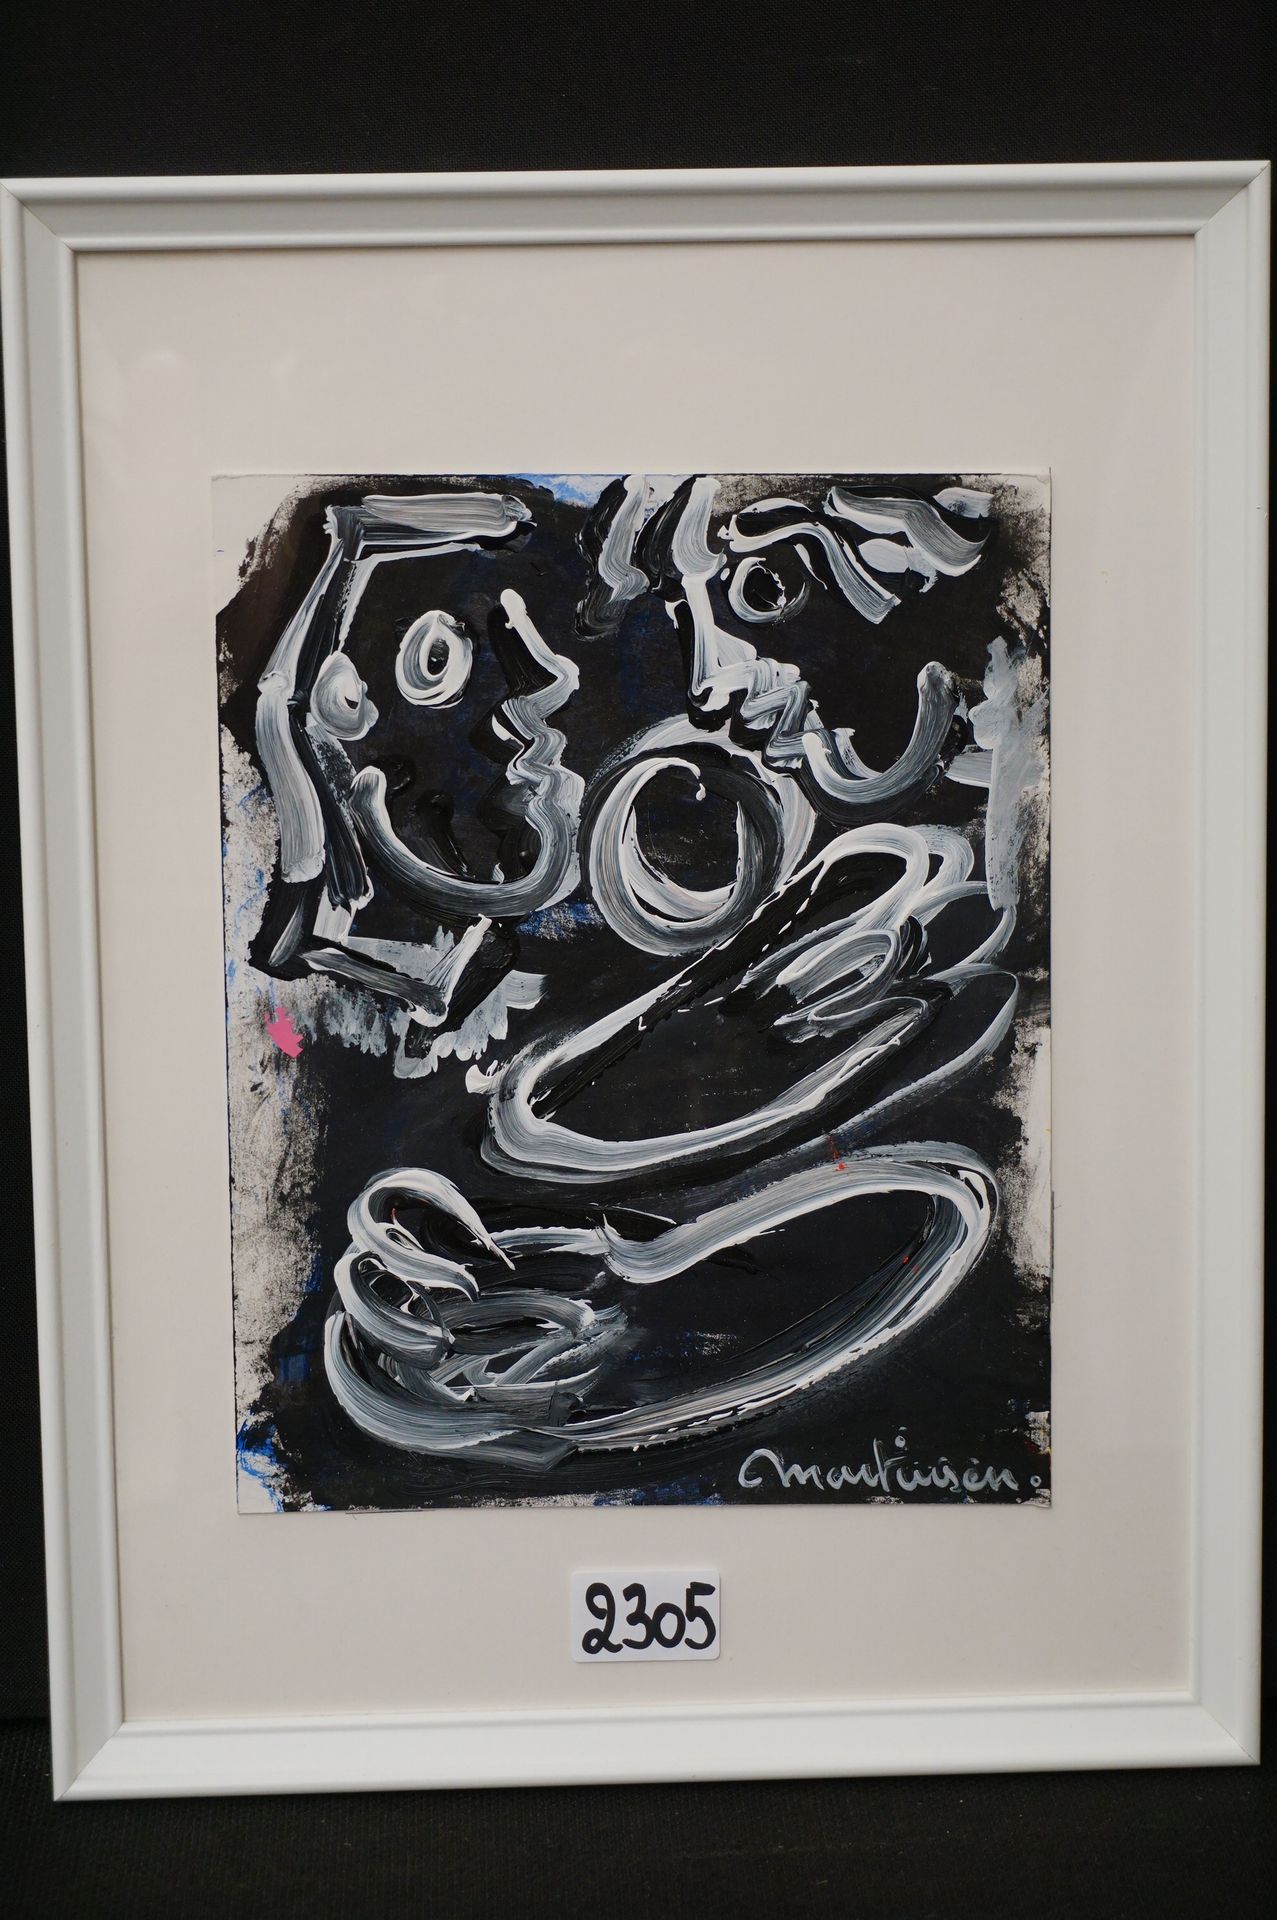 LUC MARTINSEN (1951 - ) "Moderne Komposition" - Acryl - Signiert - 27 x 22 cm